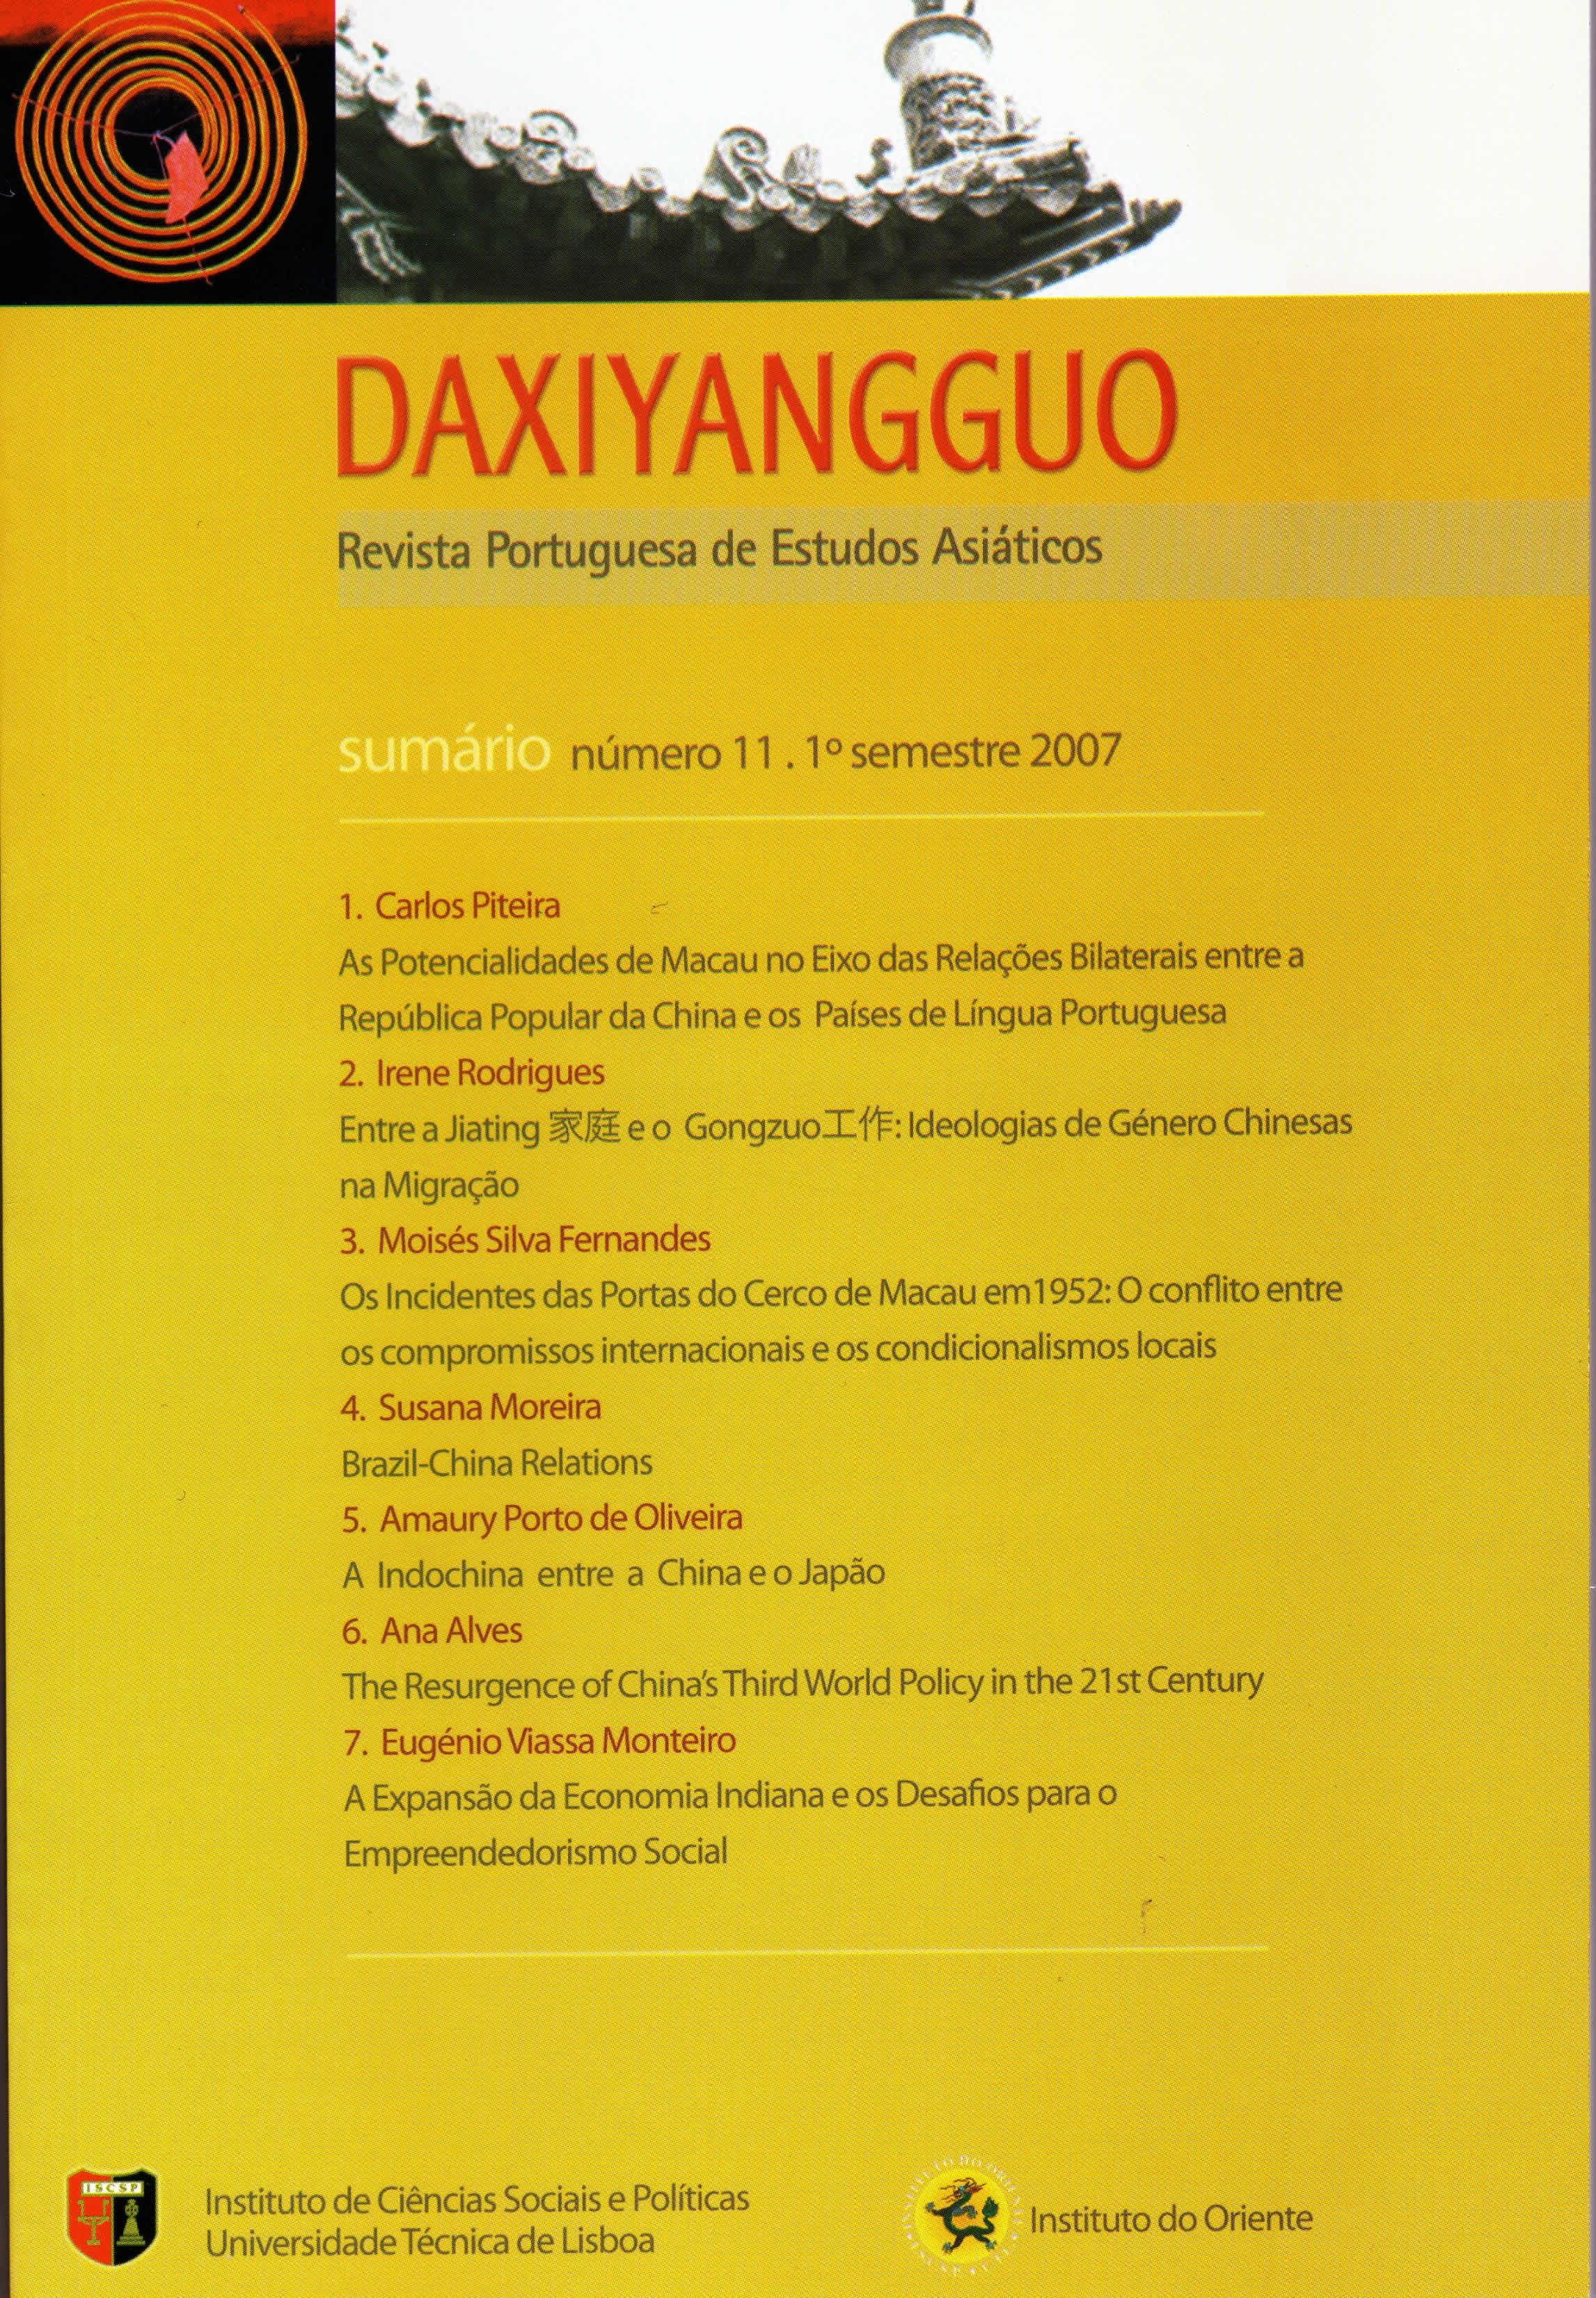 Daxiyangguo - Issue 11